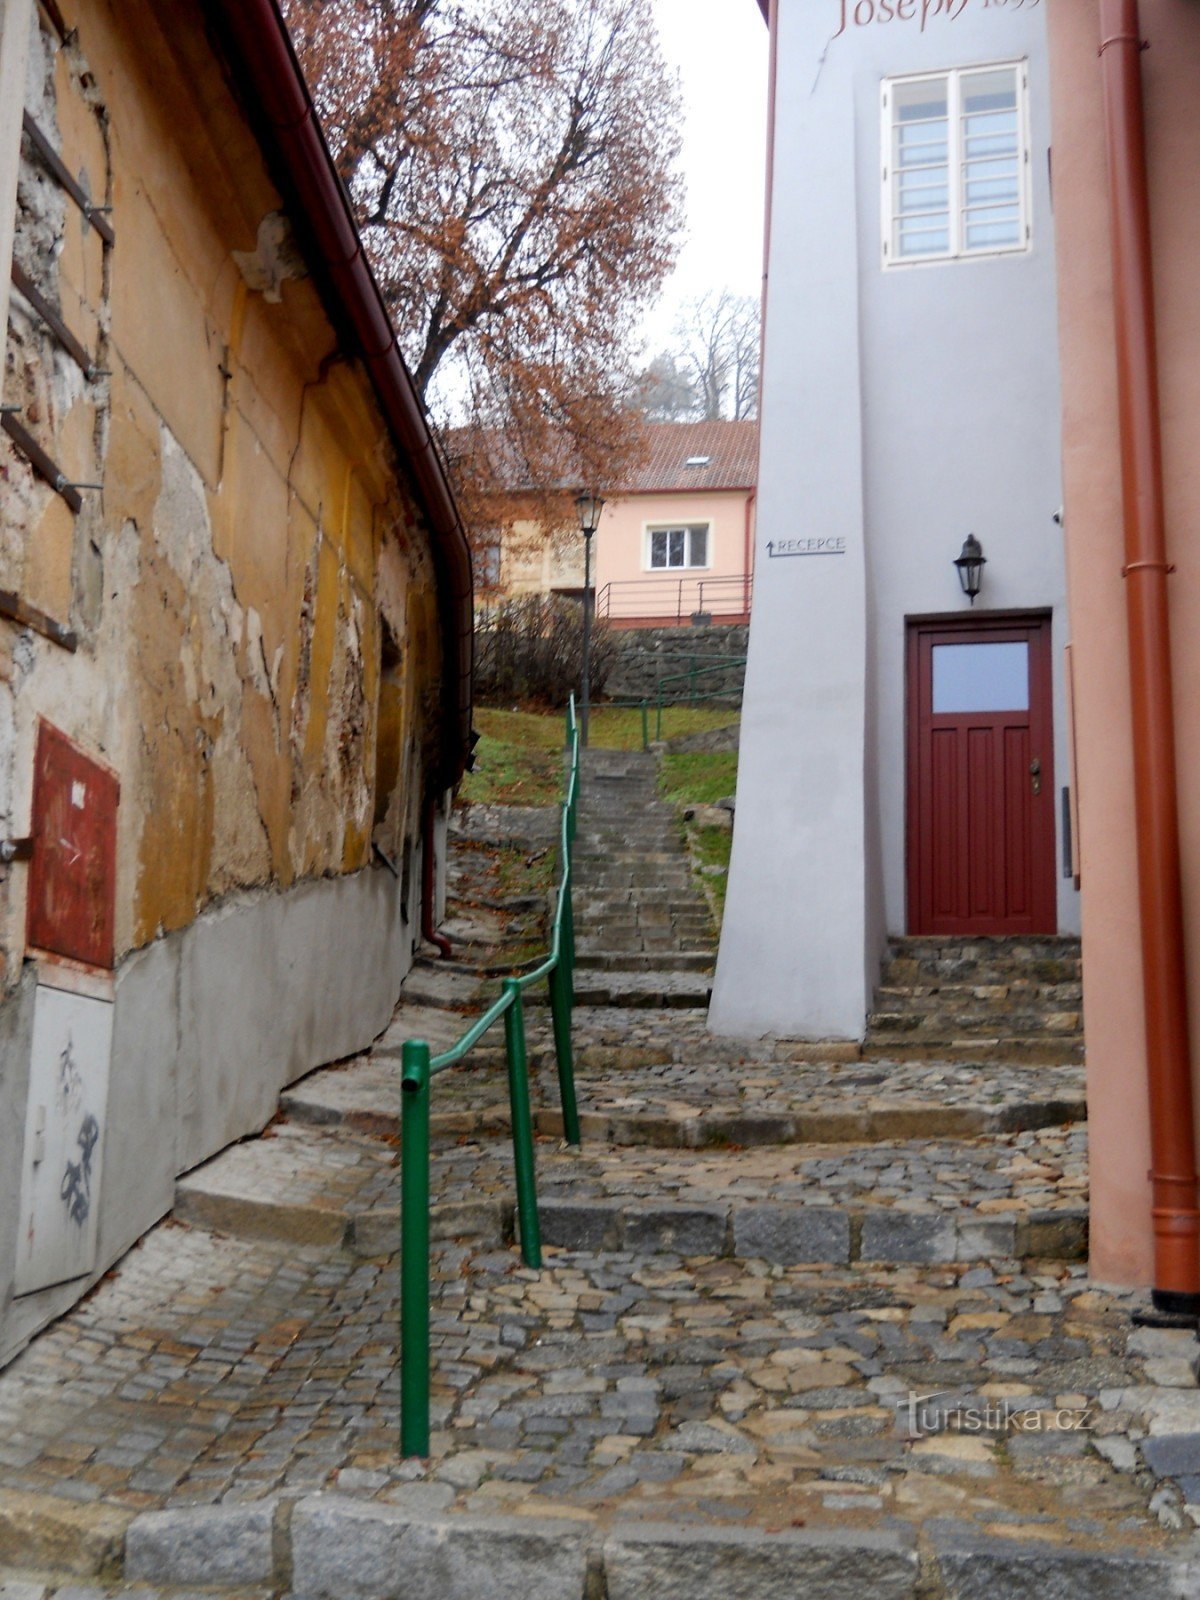 Třebíč - μια πόλη με εβραϊκά μνημεία